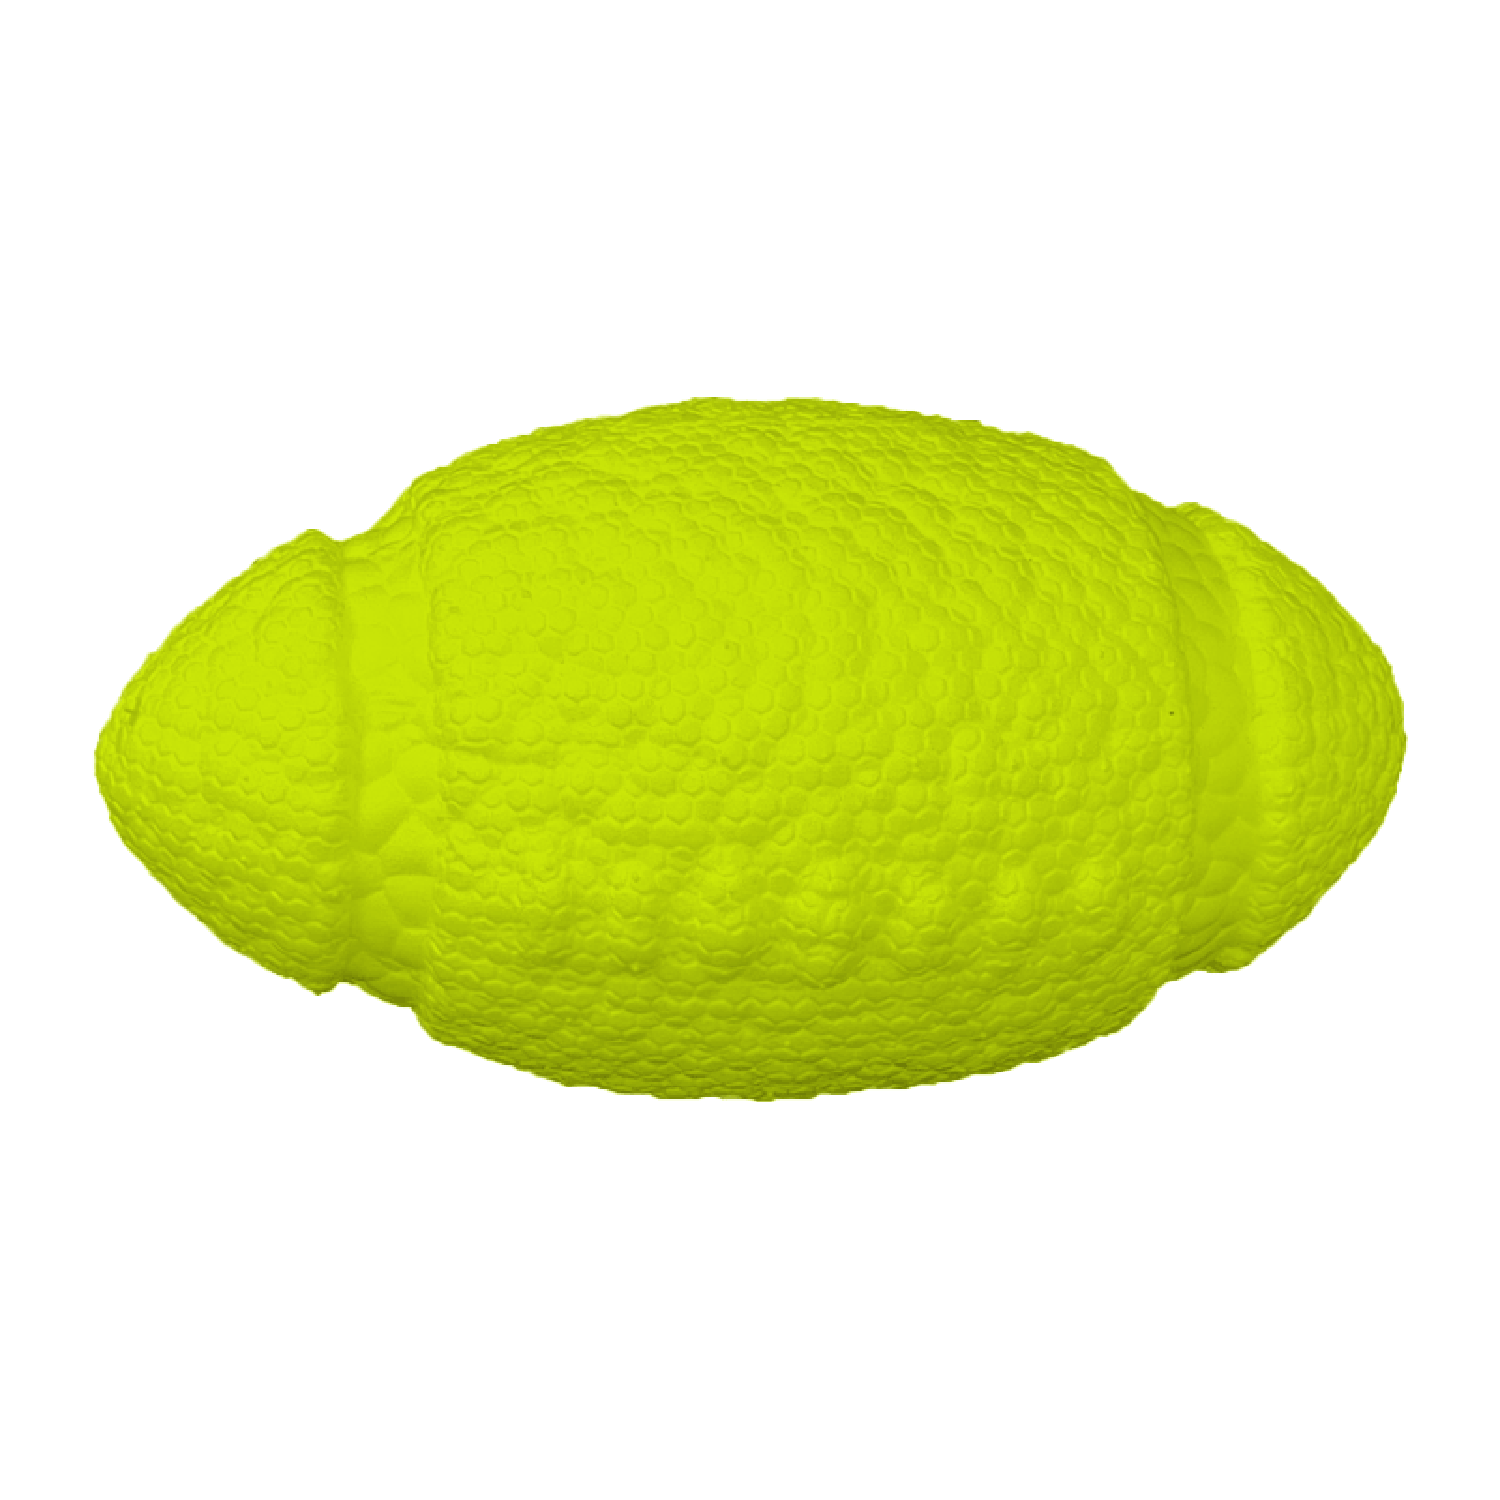 Игрушка Mr. Kranch Мяч-регби желтый д/соб 14 см